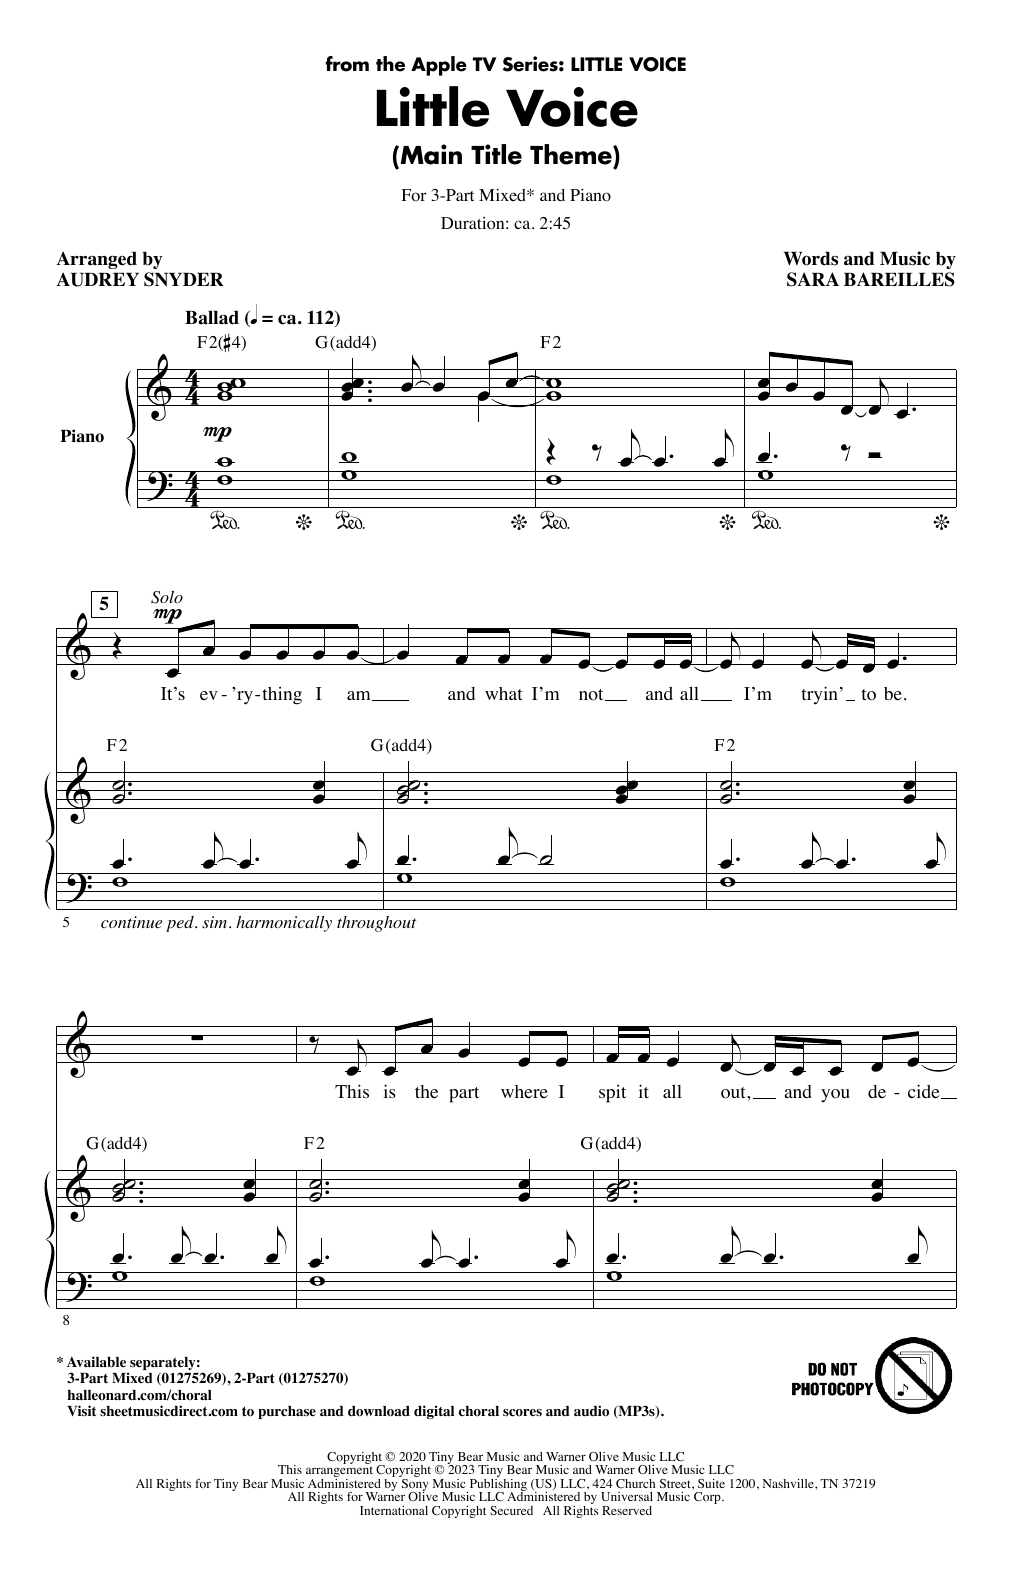 Sara Bareilles Little Voice - Main Title Theme (arr. Audrey Snyder) Sheet Music Notes & Chords for 3-Part Mixed Choir - Download or Print PDF